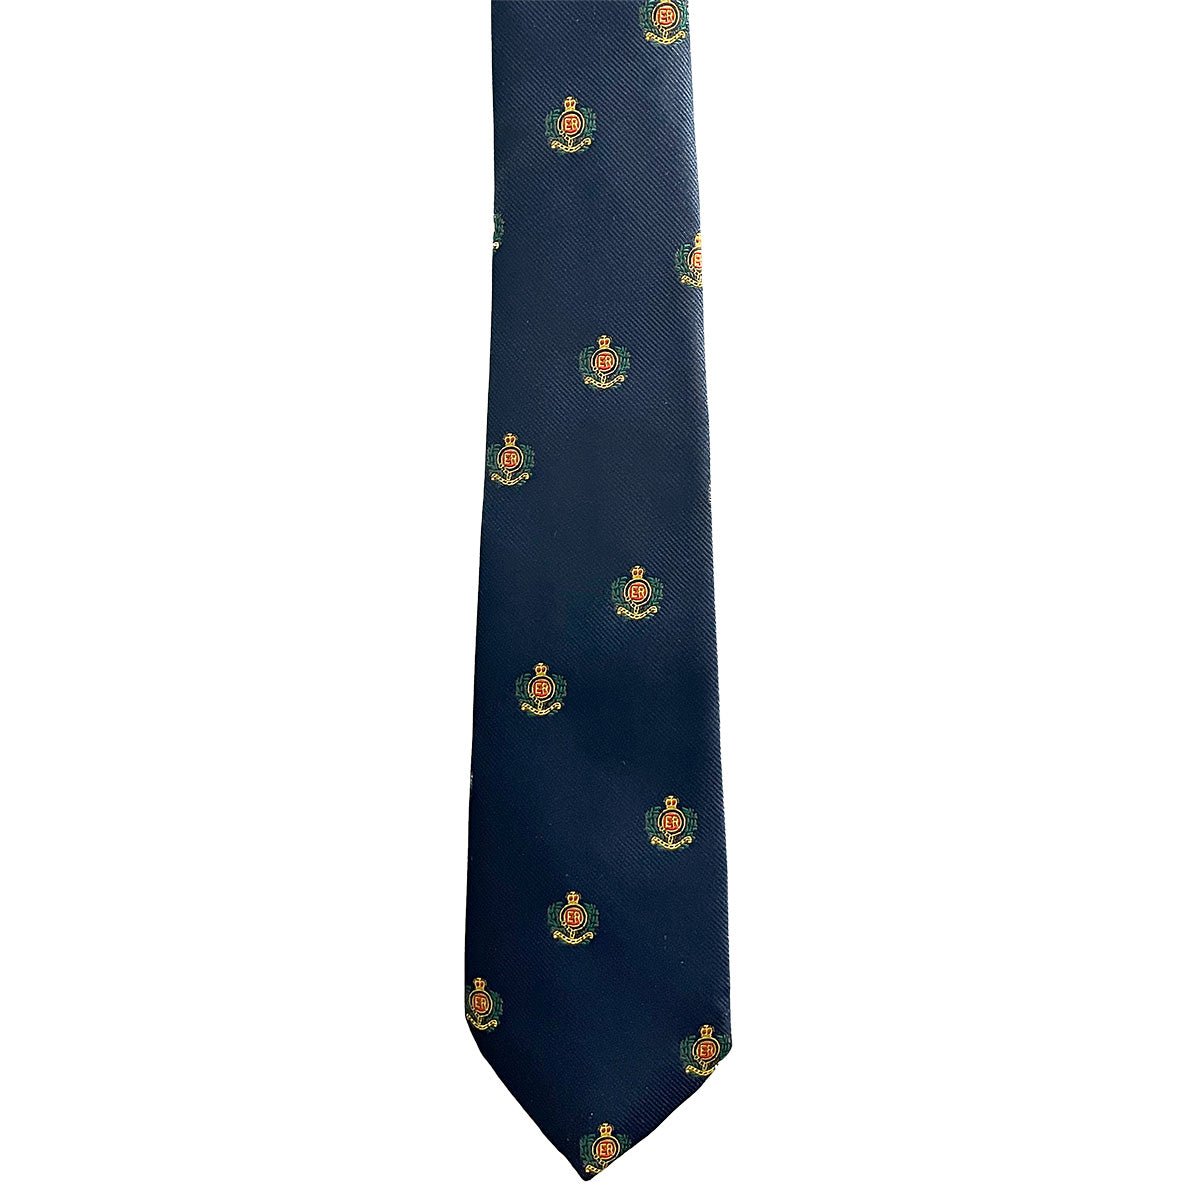 Royal Engineers Crest Regimental Polyester Tie - John Bull Clothing